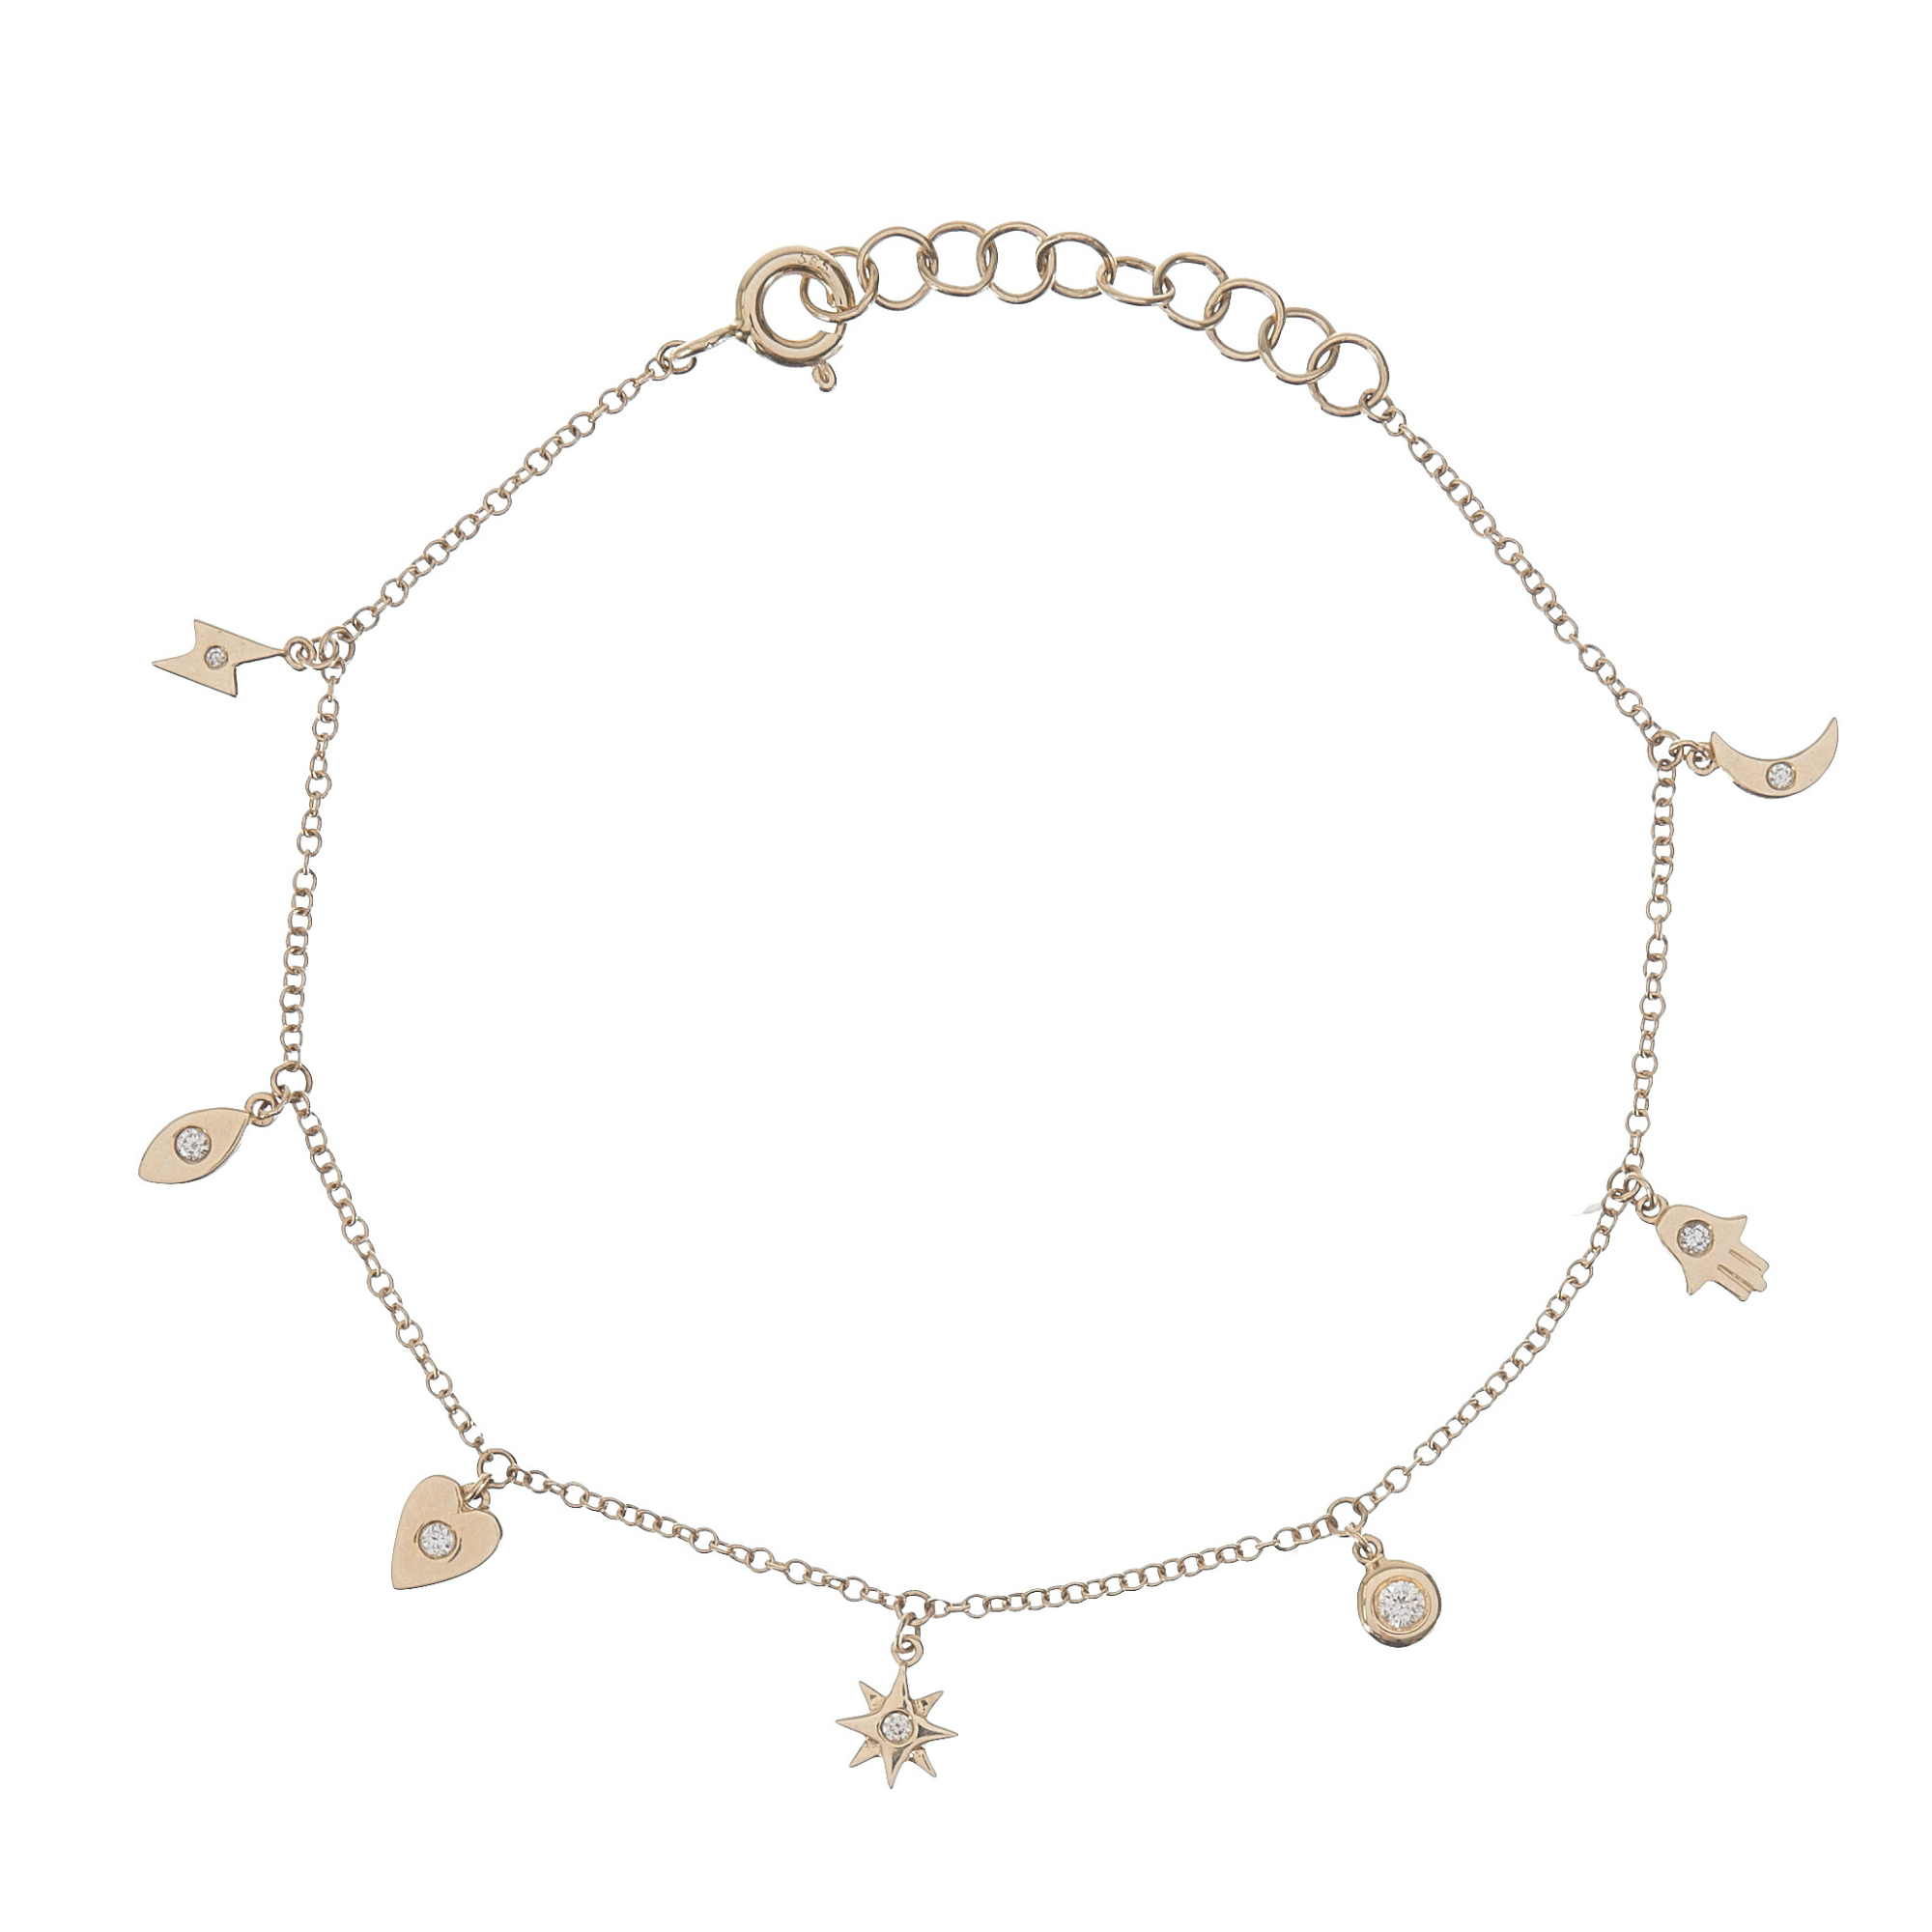 Diamond Multi-Charm Bracelet - Moondance Jewelry Gallery